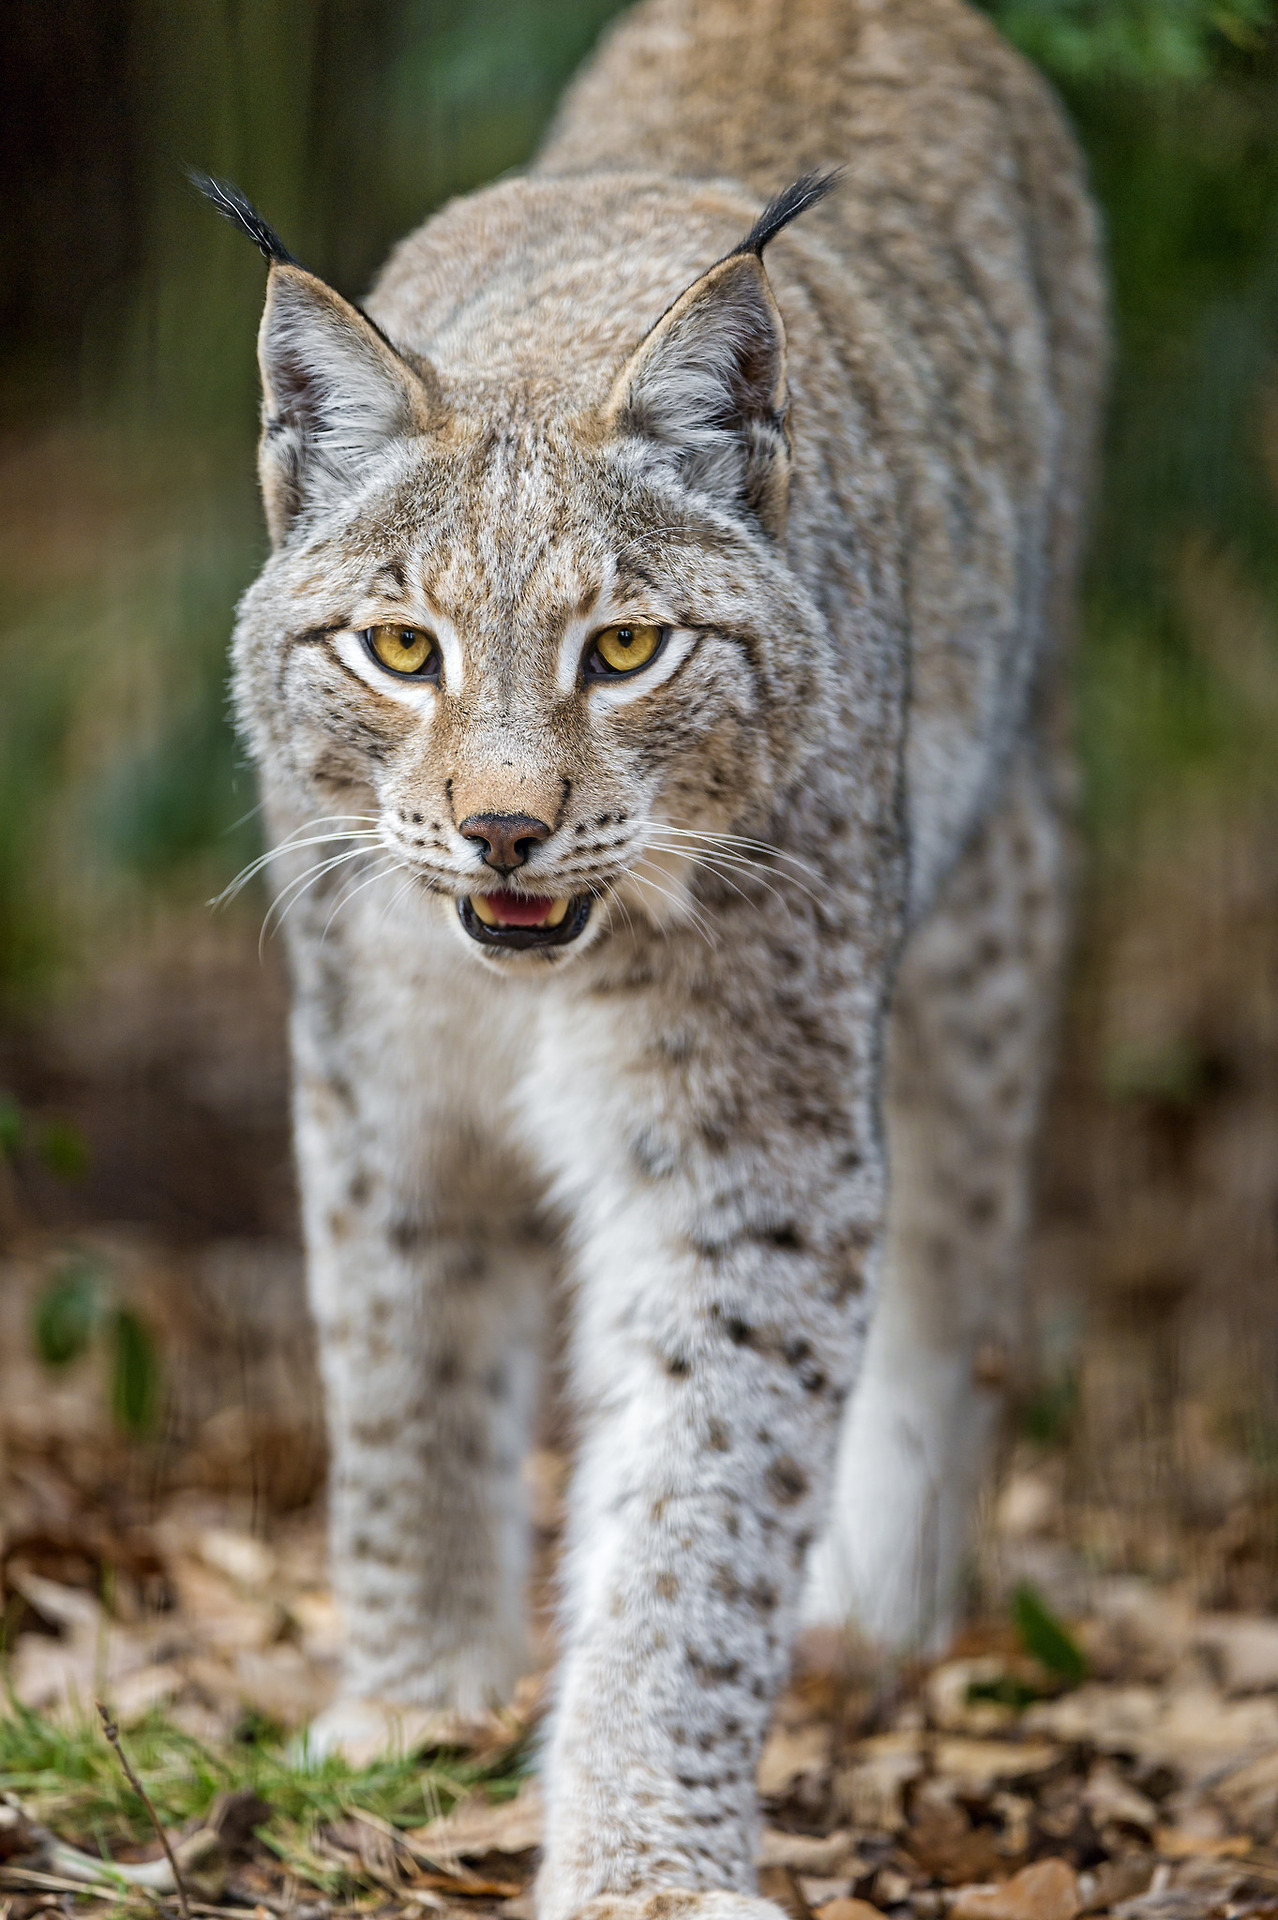 wild-diary:
“Young Lynx | Tambako
”